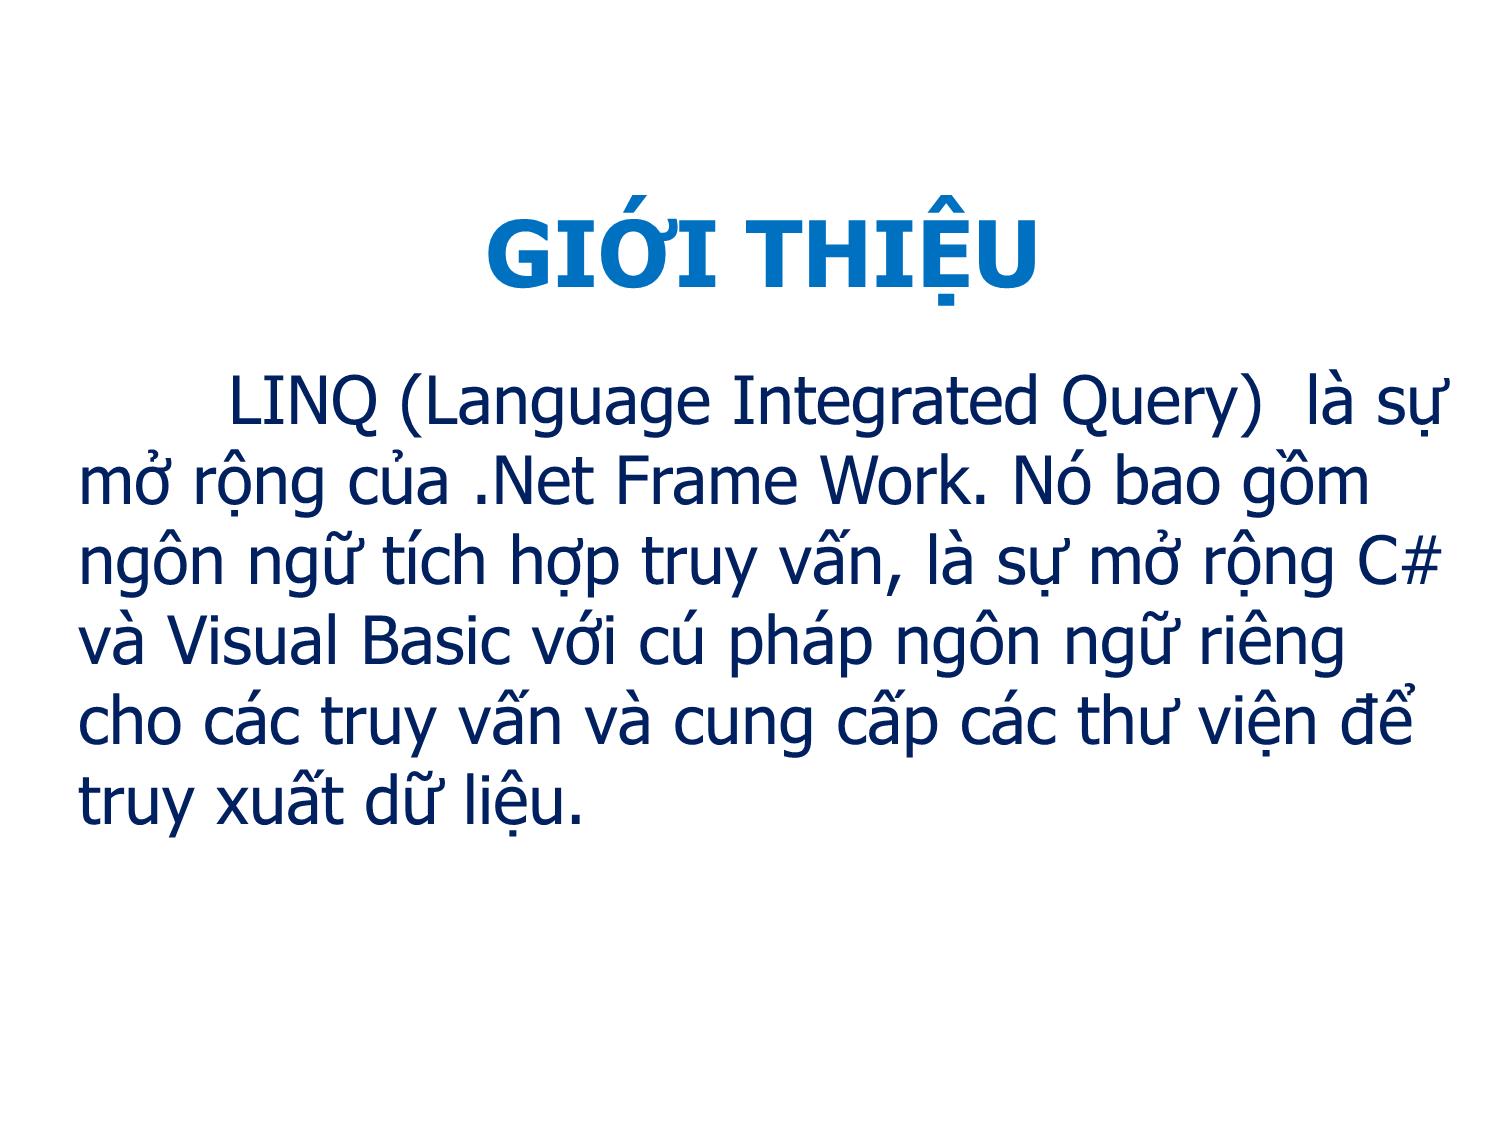 LINQ (Language - Integrated Query) trang 2